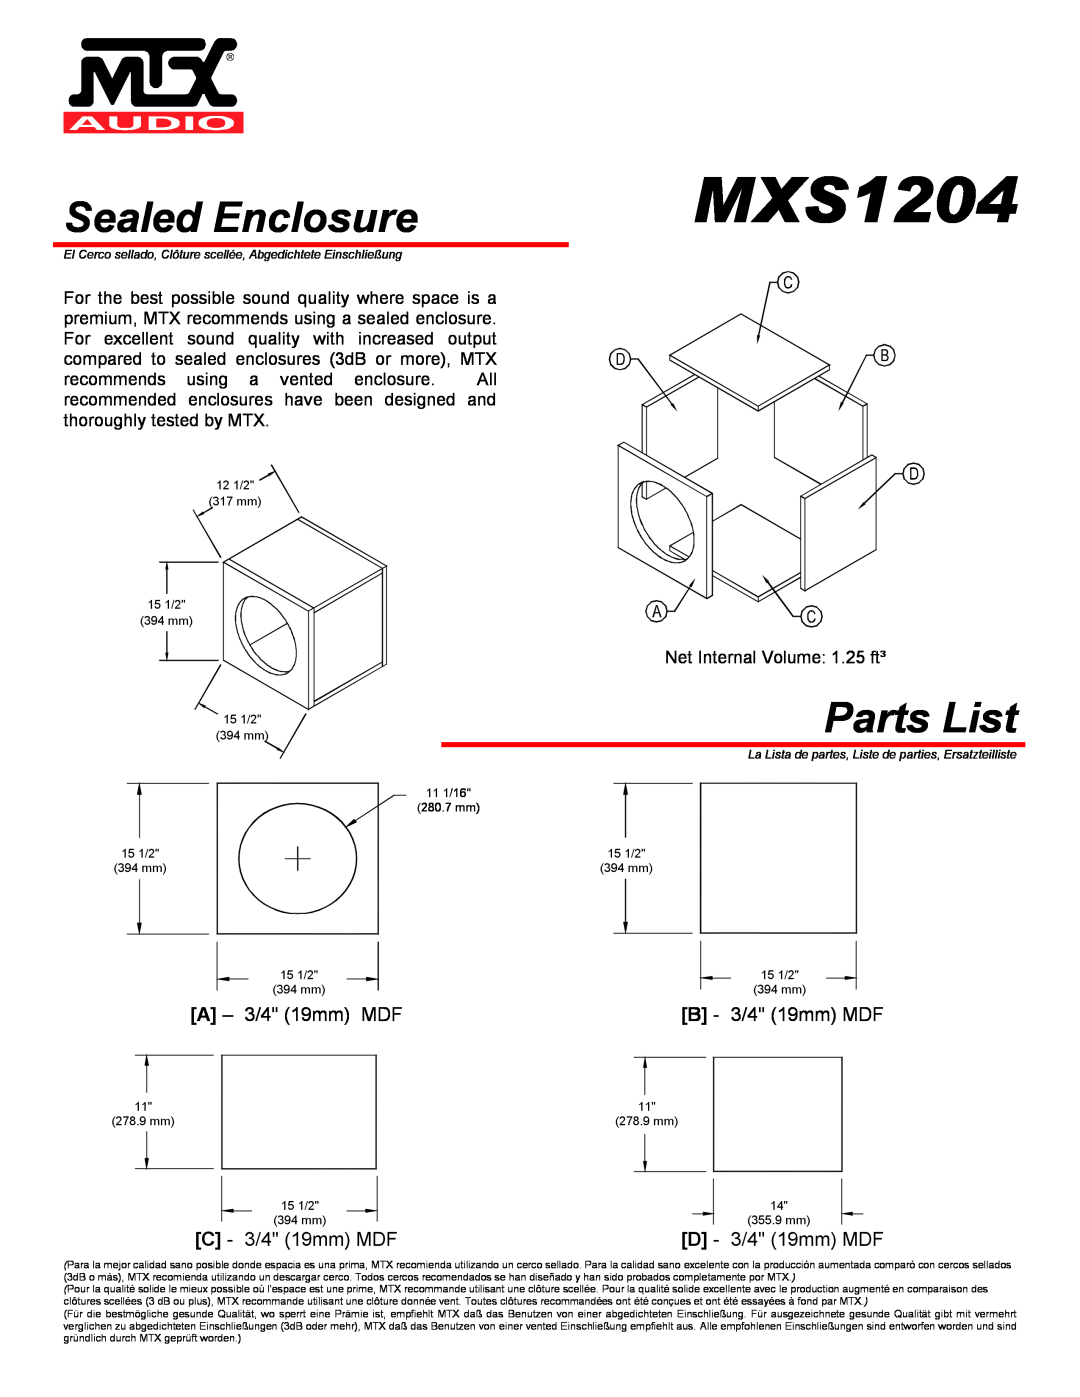 MTX Audio MXS1204 Sealed Enclosure, Parts List, A - 3/4 19mm MDF, B - 3/4 19mm MDF, C - 3/4 19mm MDF, D - 3/4 19mm MDF 